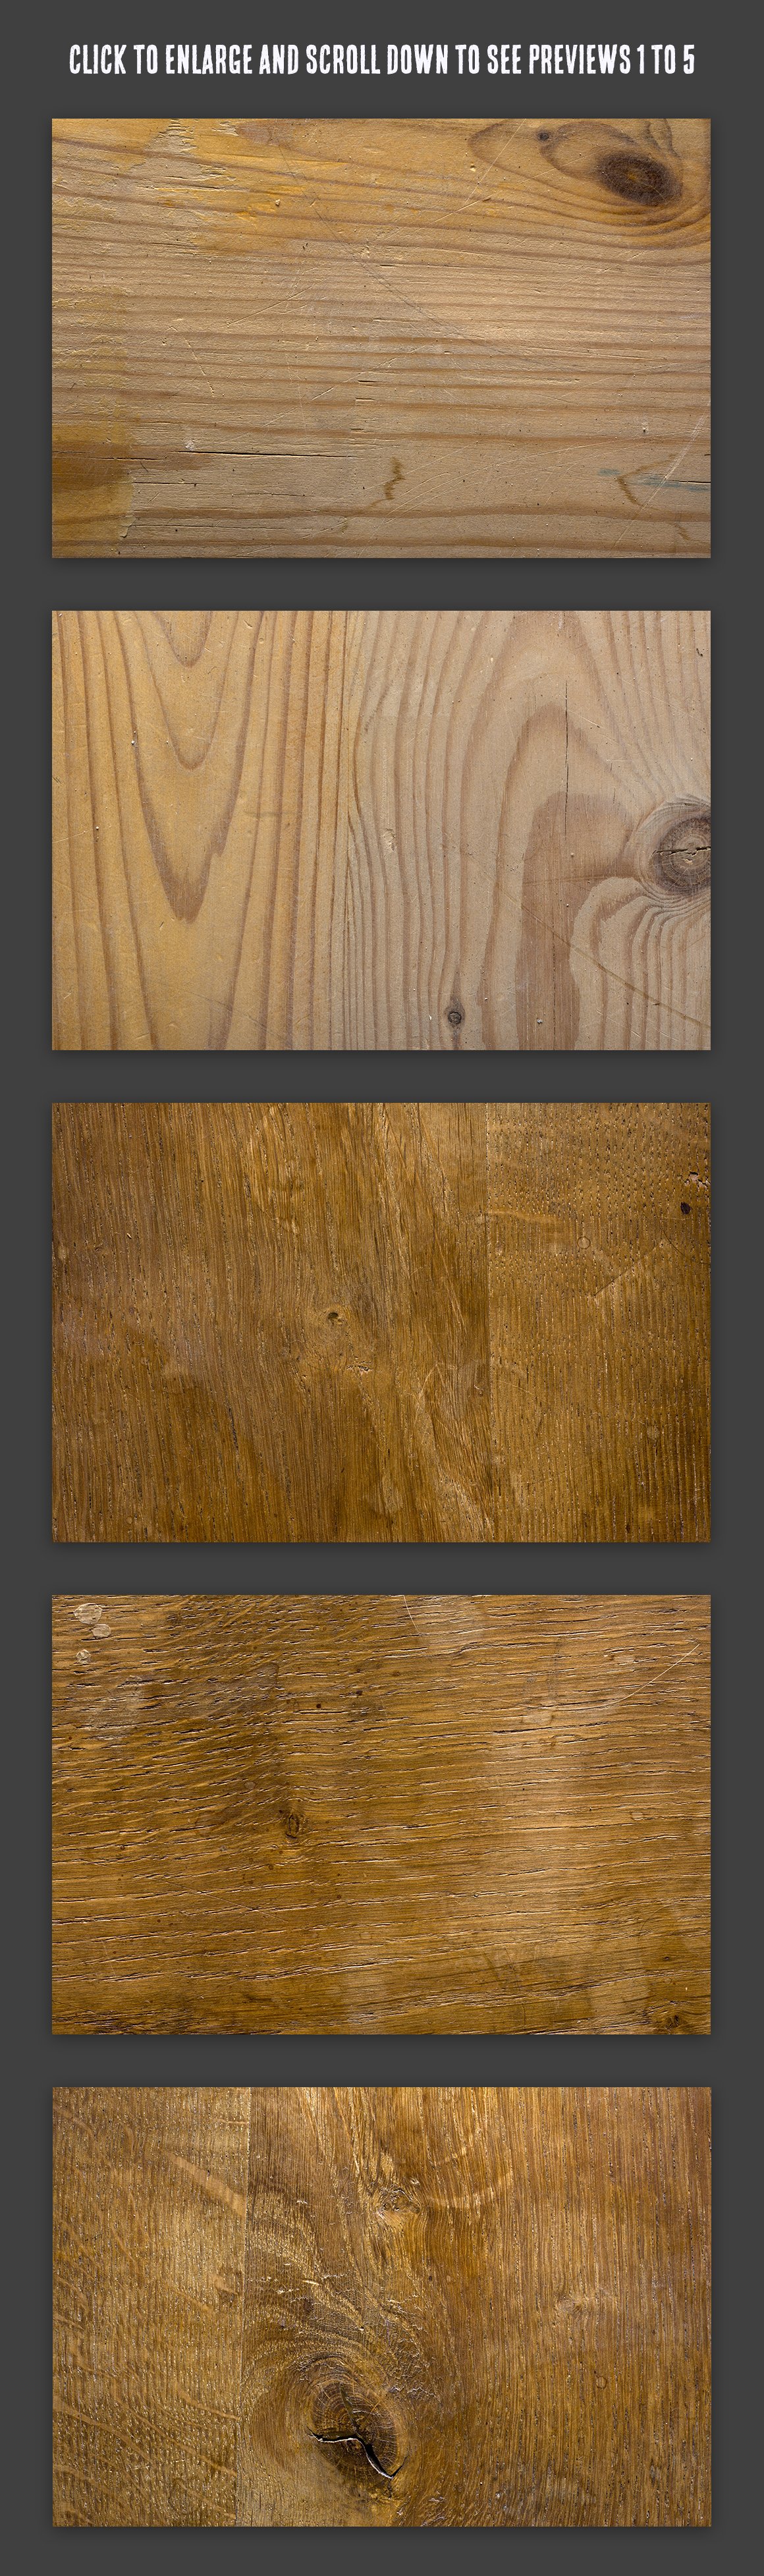 50 Wood Textures Bundle preview image.